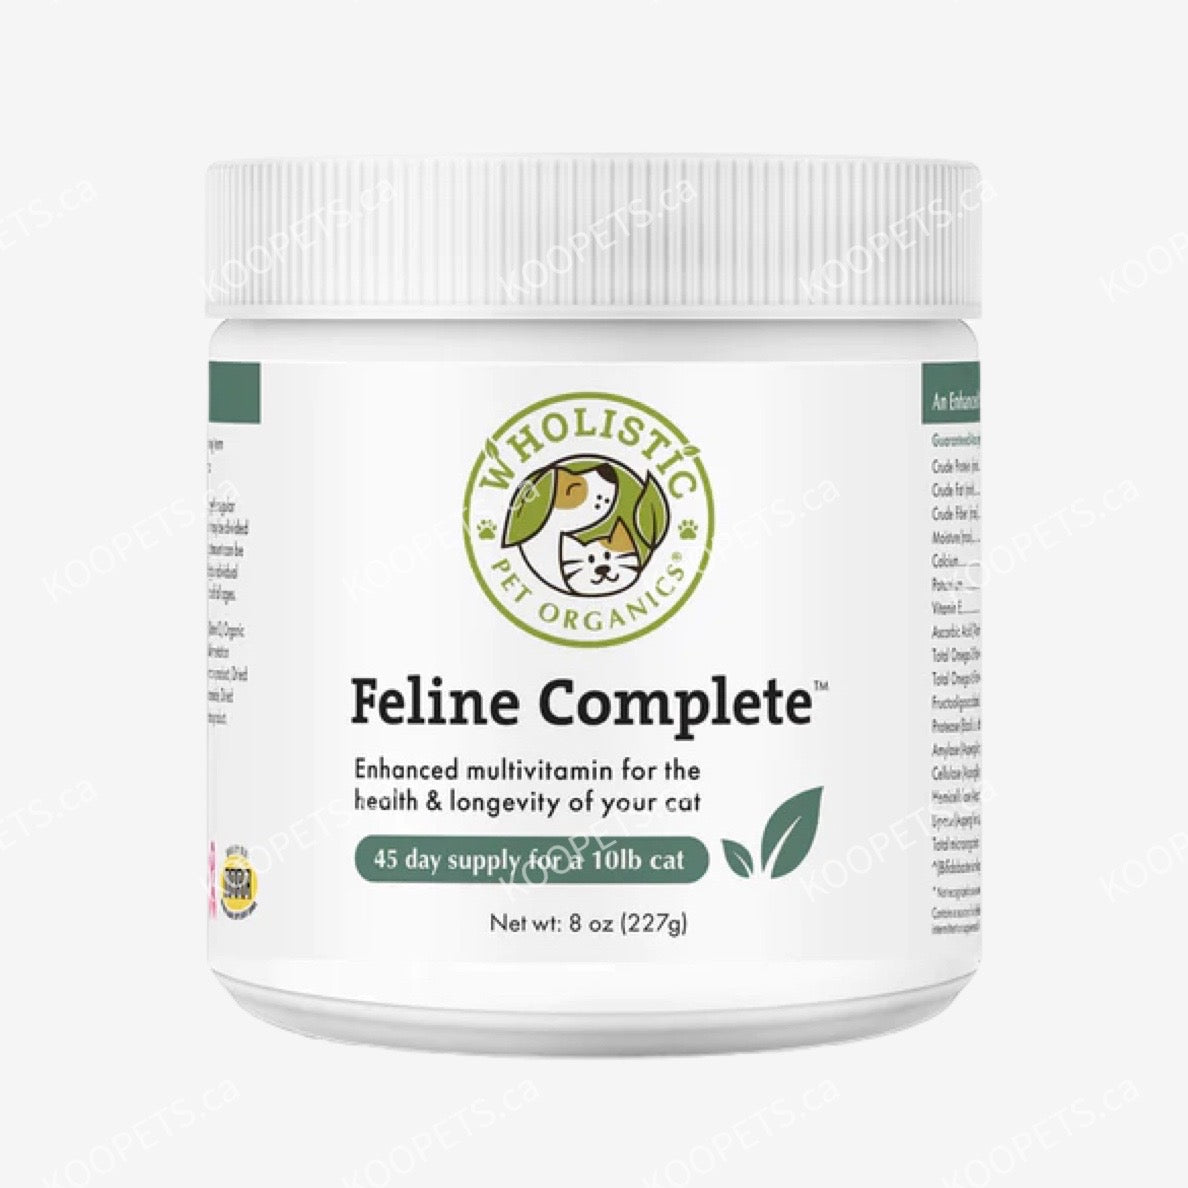 Wholistic Pet Organics | Feline Complete™